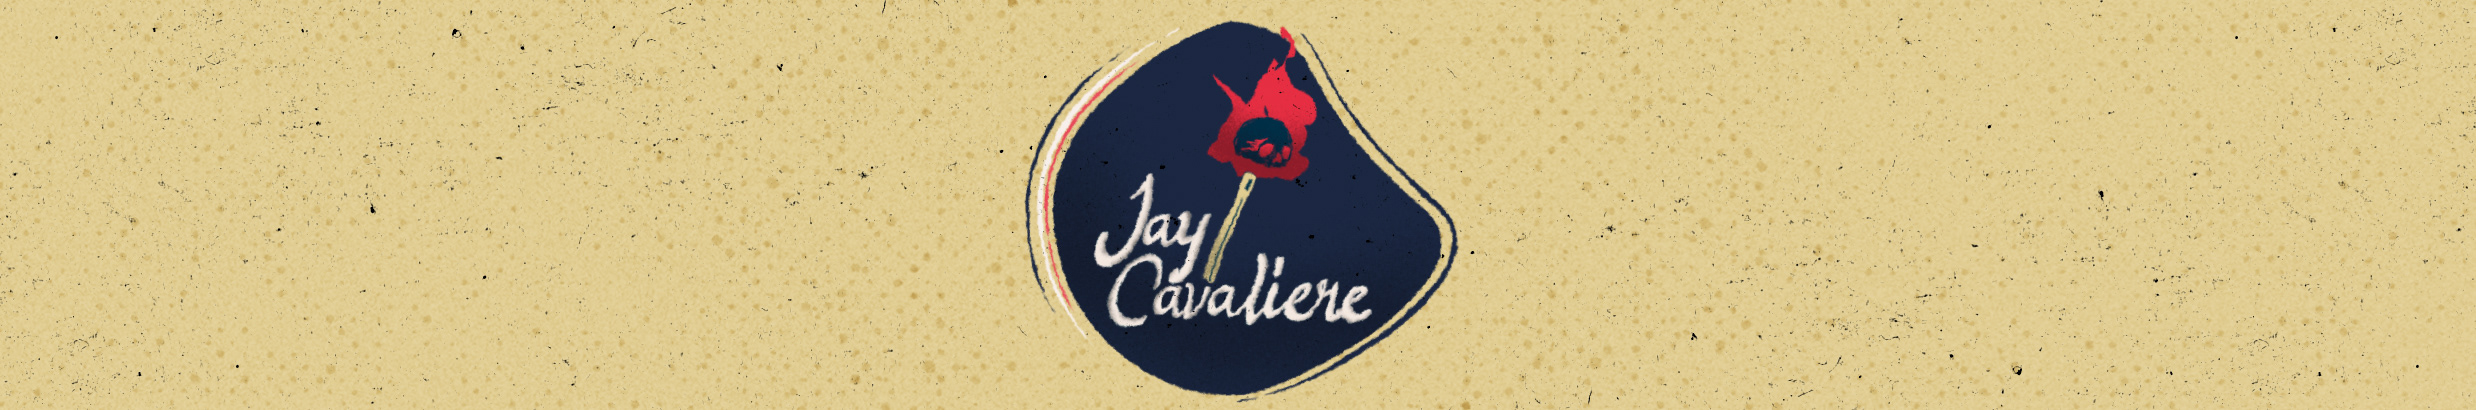 Баннер профиля Jay Cavaliere